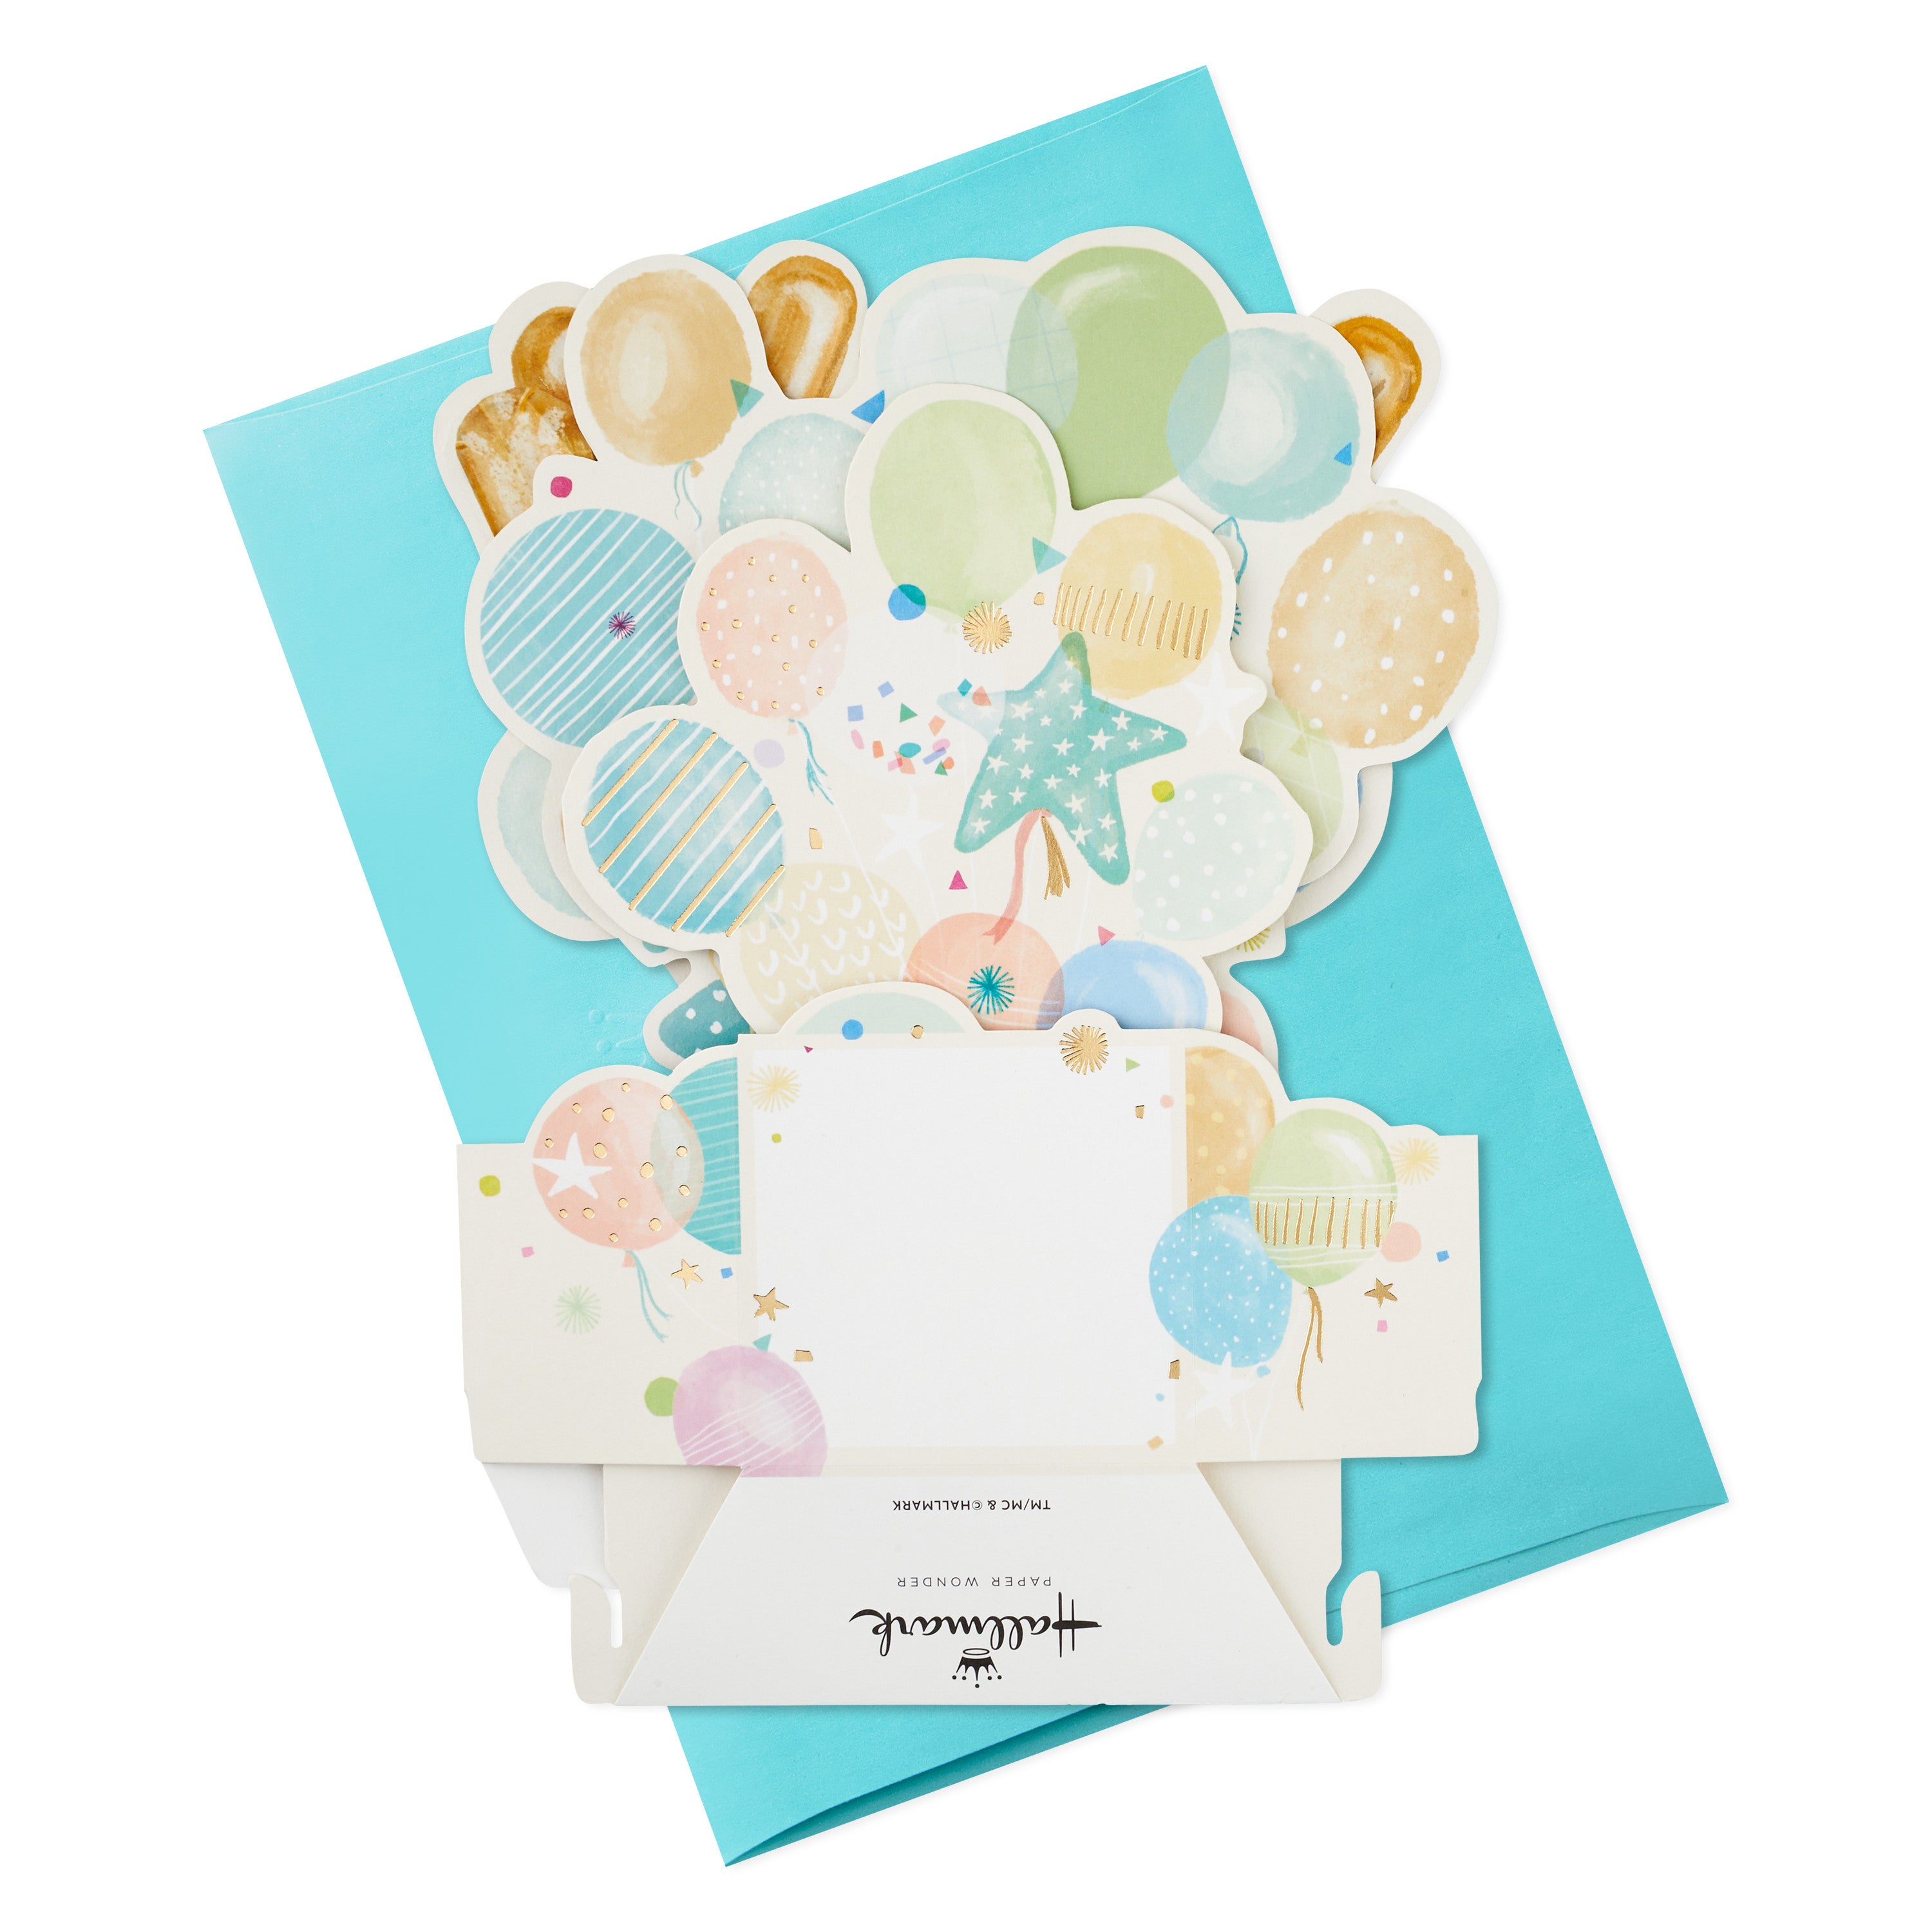 Hallmark Paper Wonder Congratulations Pop Up Card (Yay, Balloons) for Birthdays, Graduations, Promotions, Celebrations